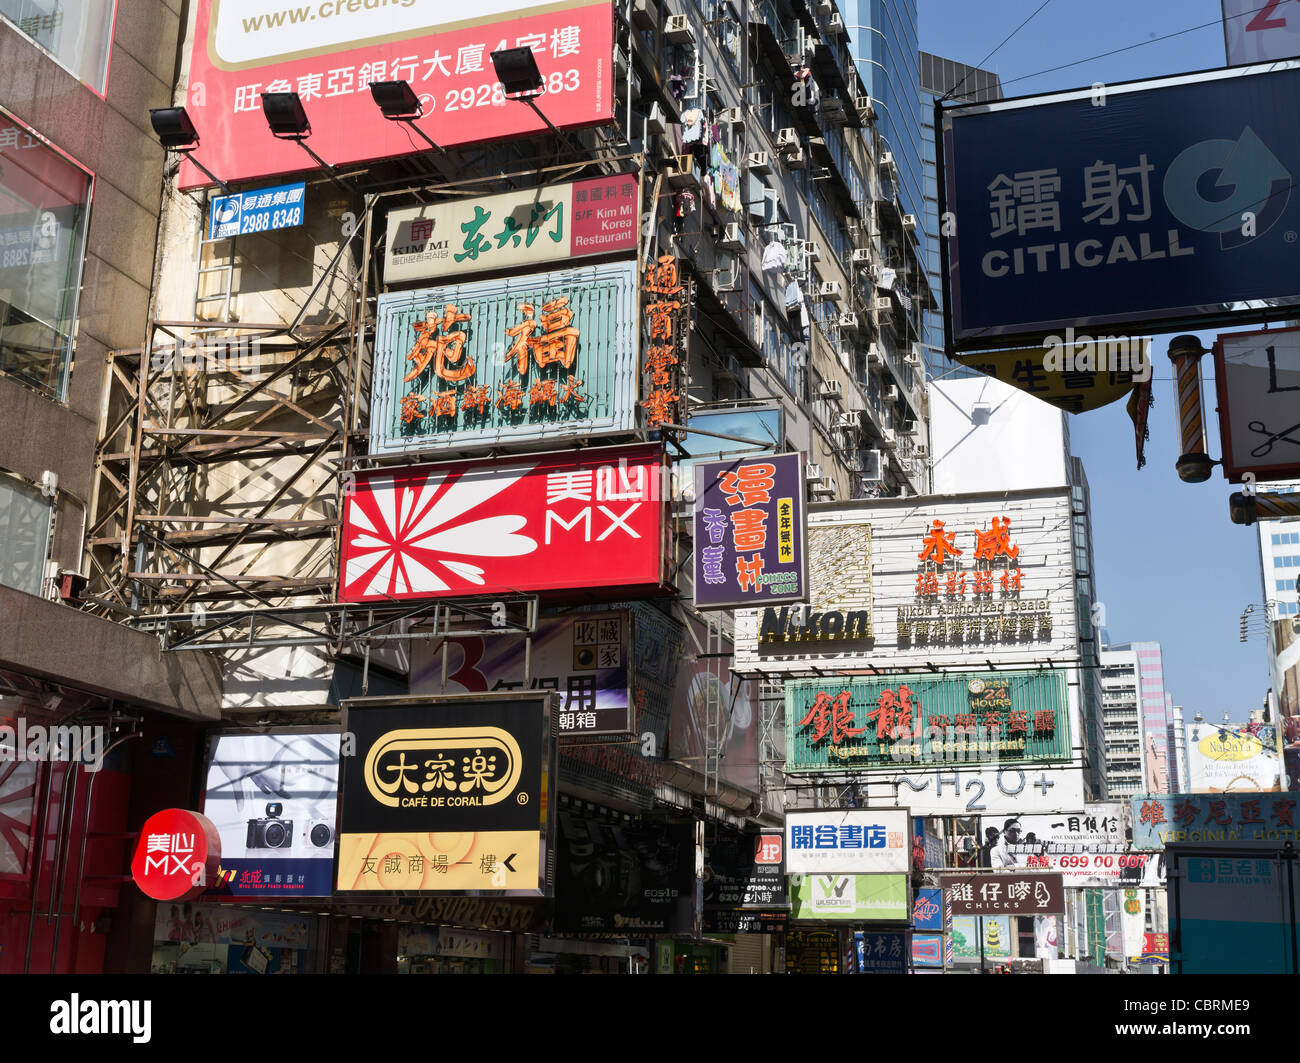 dh Chinese billboards calligraphy MONG KOK HONG KONG Mongkok adverts street advertising signs advertisement billboard ad Stock Photo